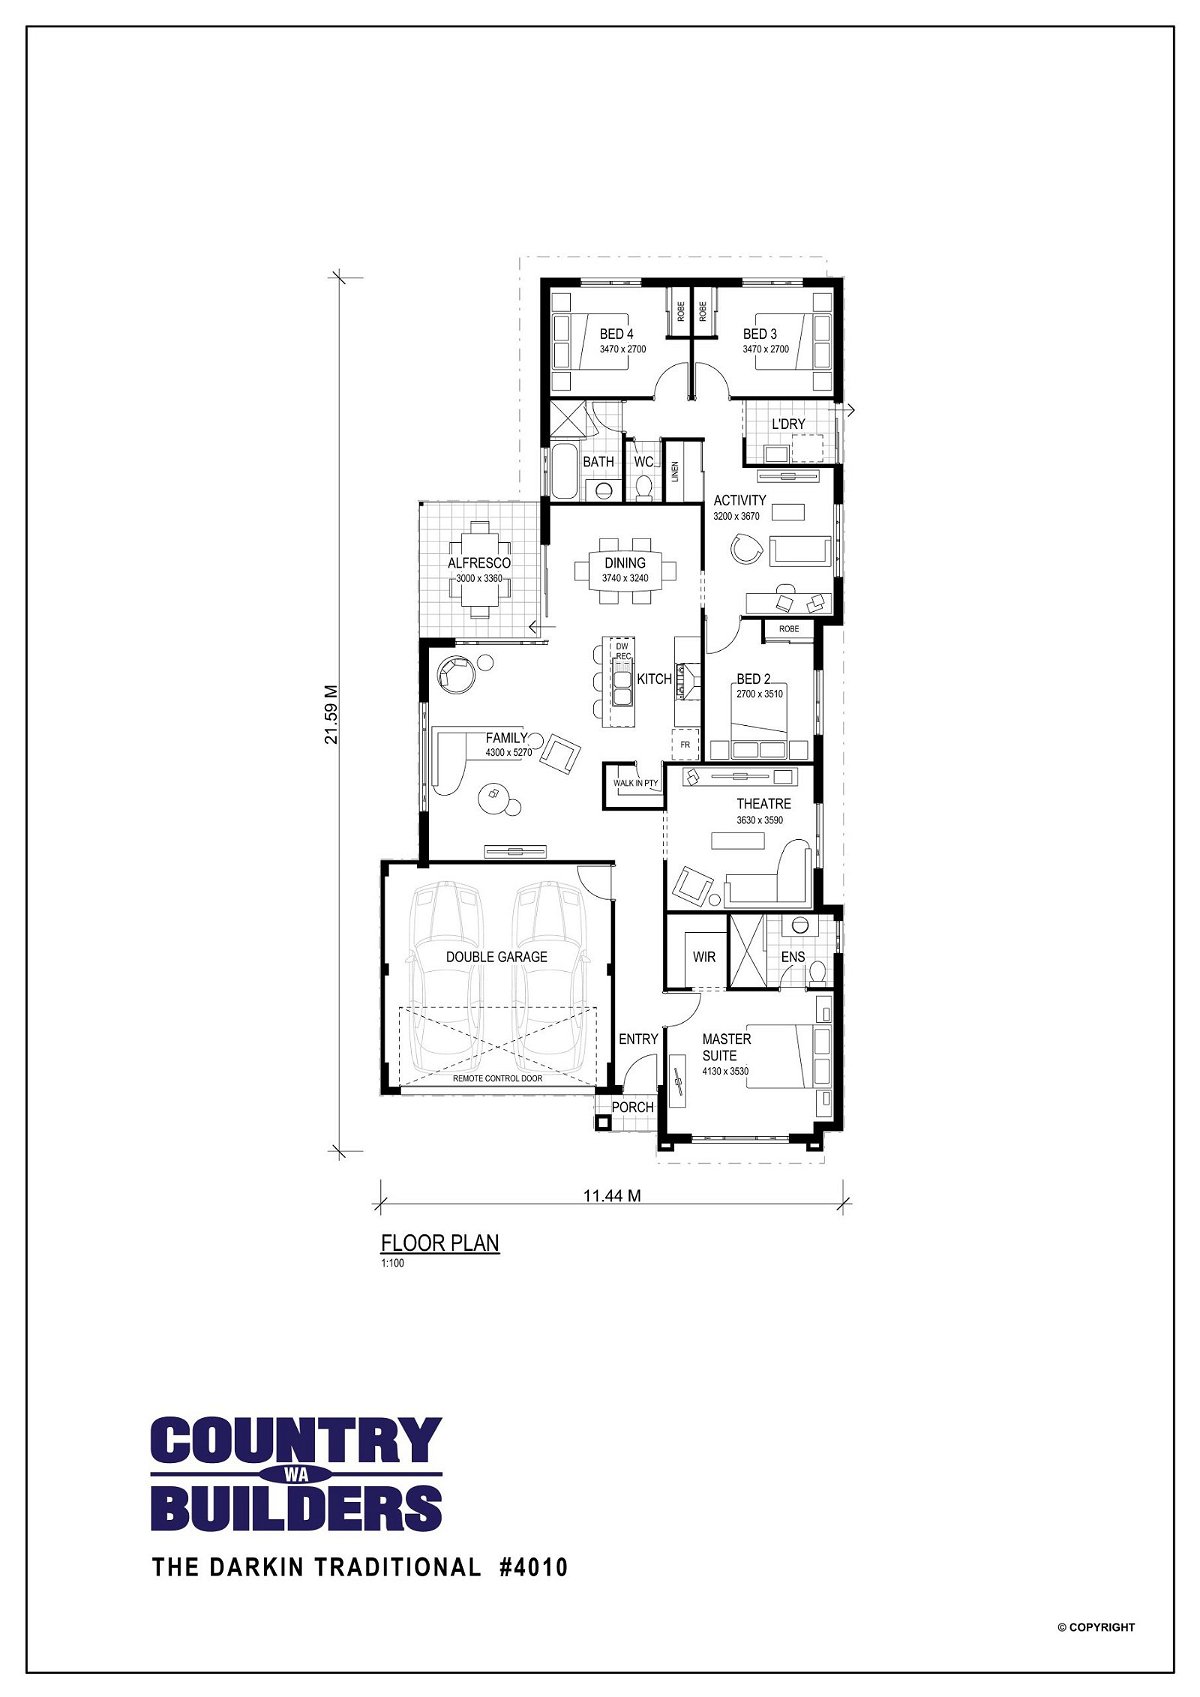 Wa Country Builders - Barnes Drive, Bremer Bay, Wa 6338 - Floorplan - 4010P The Darkin 125M Brochure Artwork